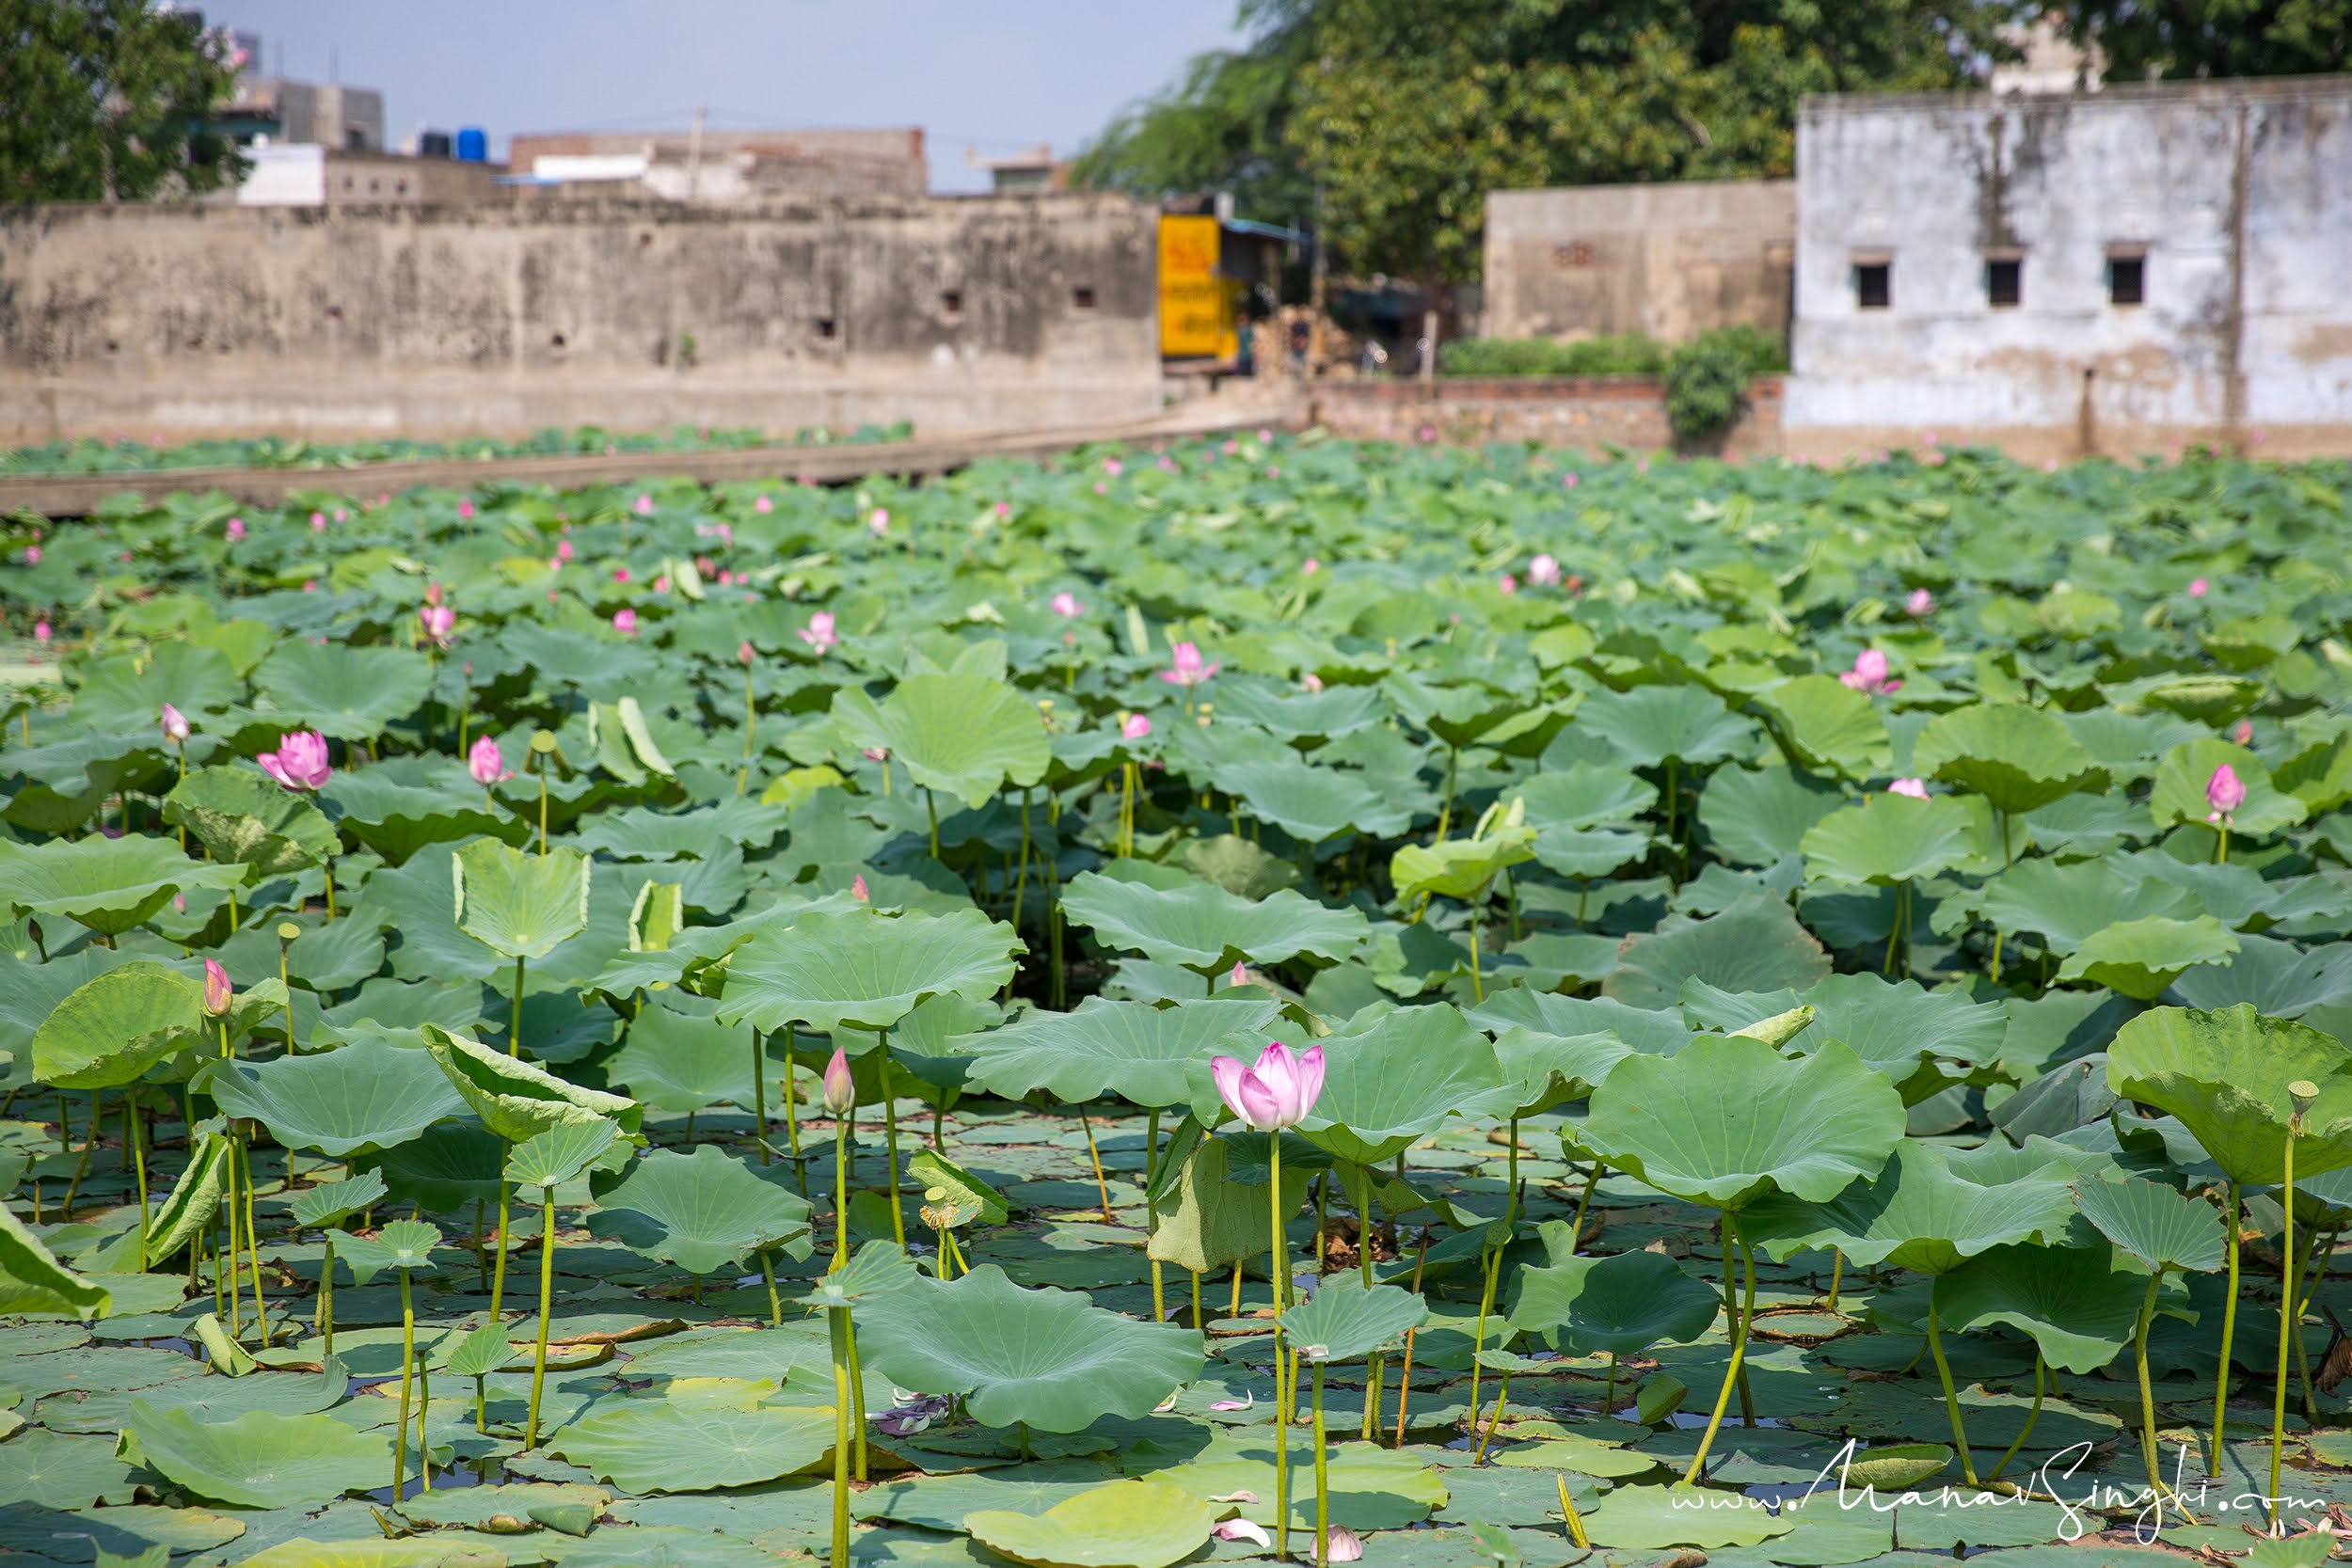 Lotus Pond at Mundia Village near Jaipur.